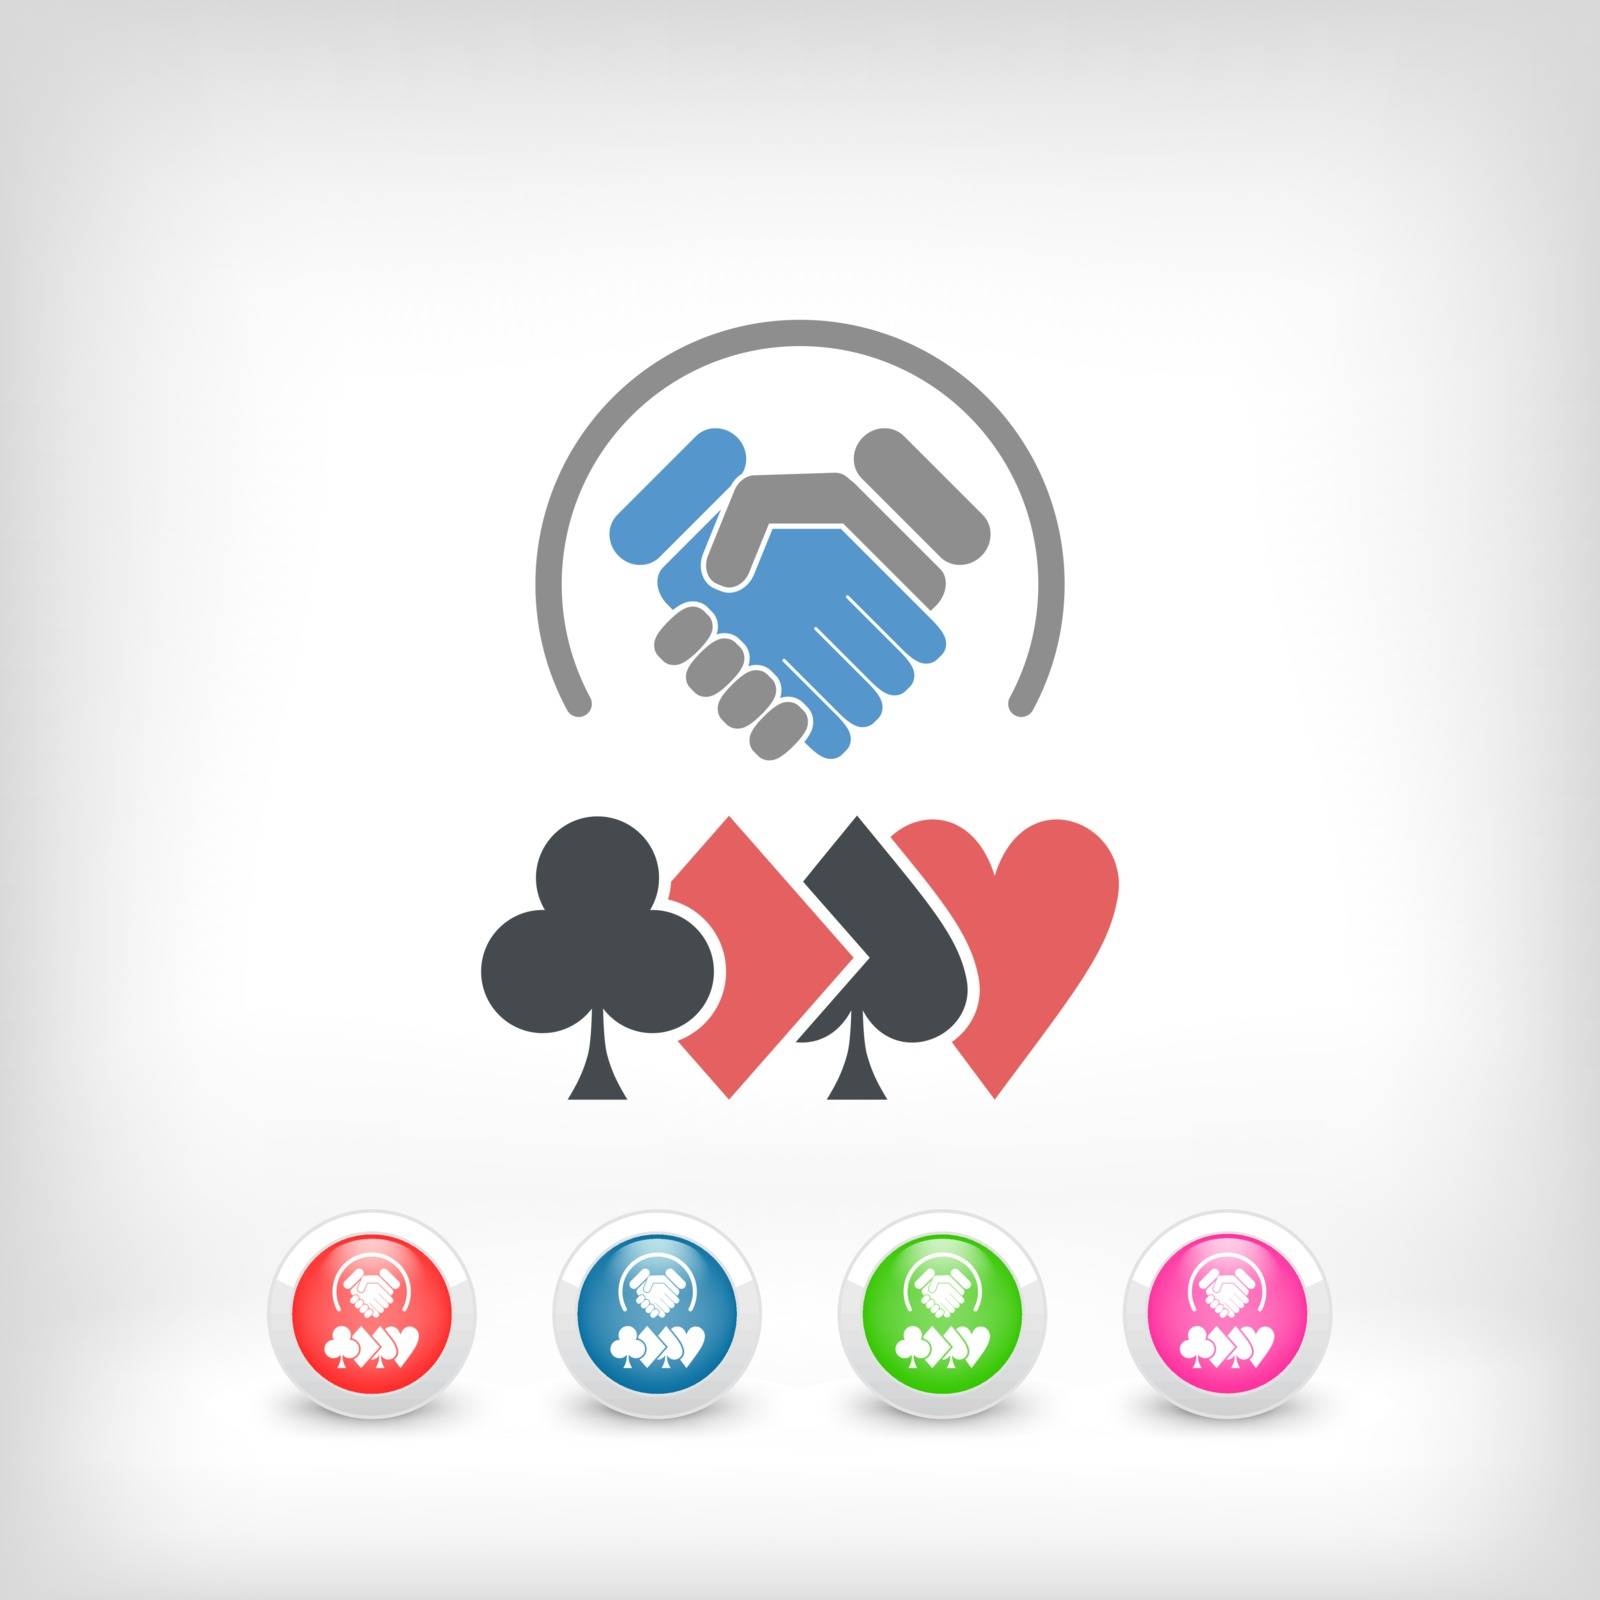 Poker challenge icon